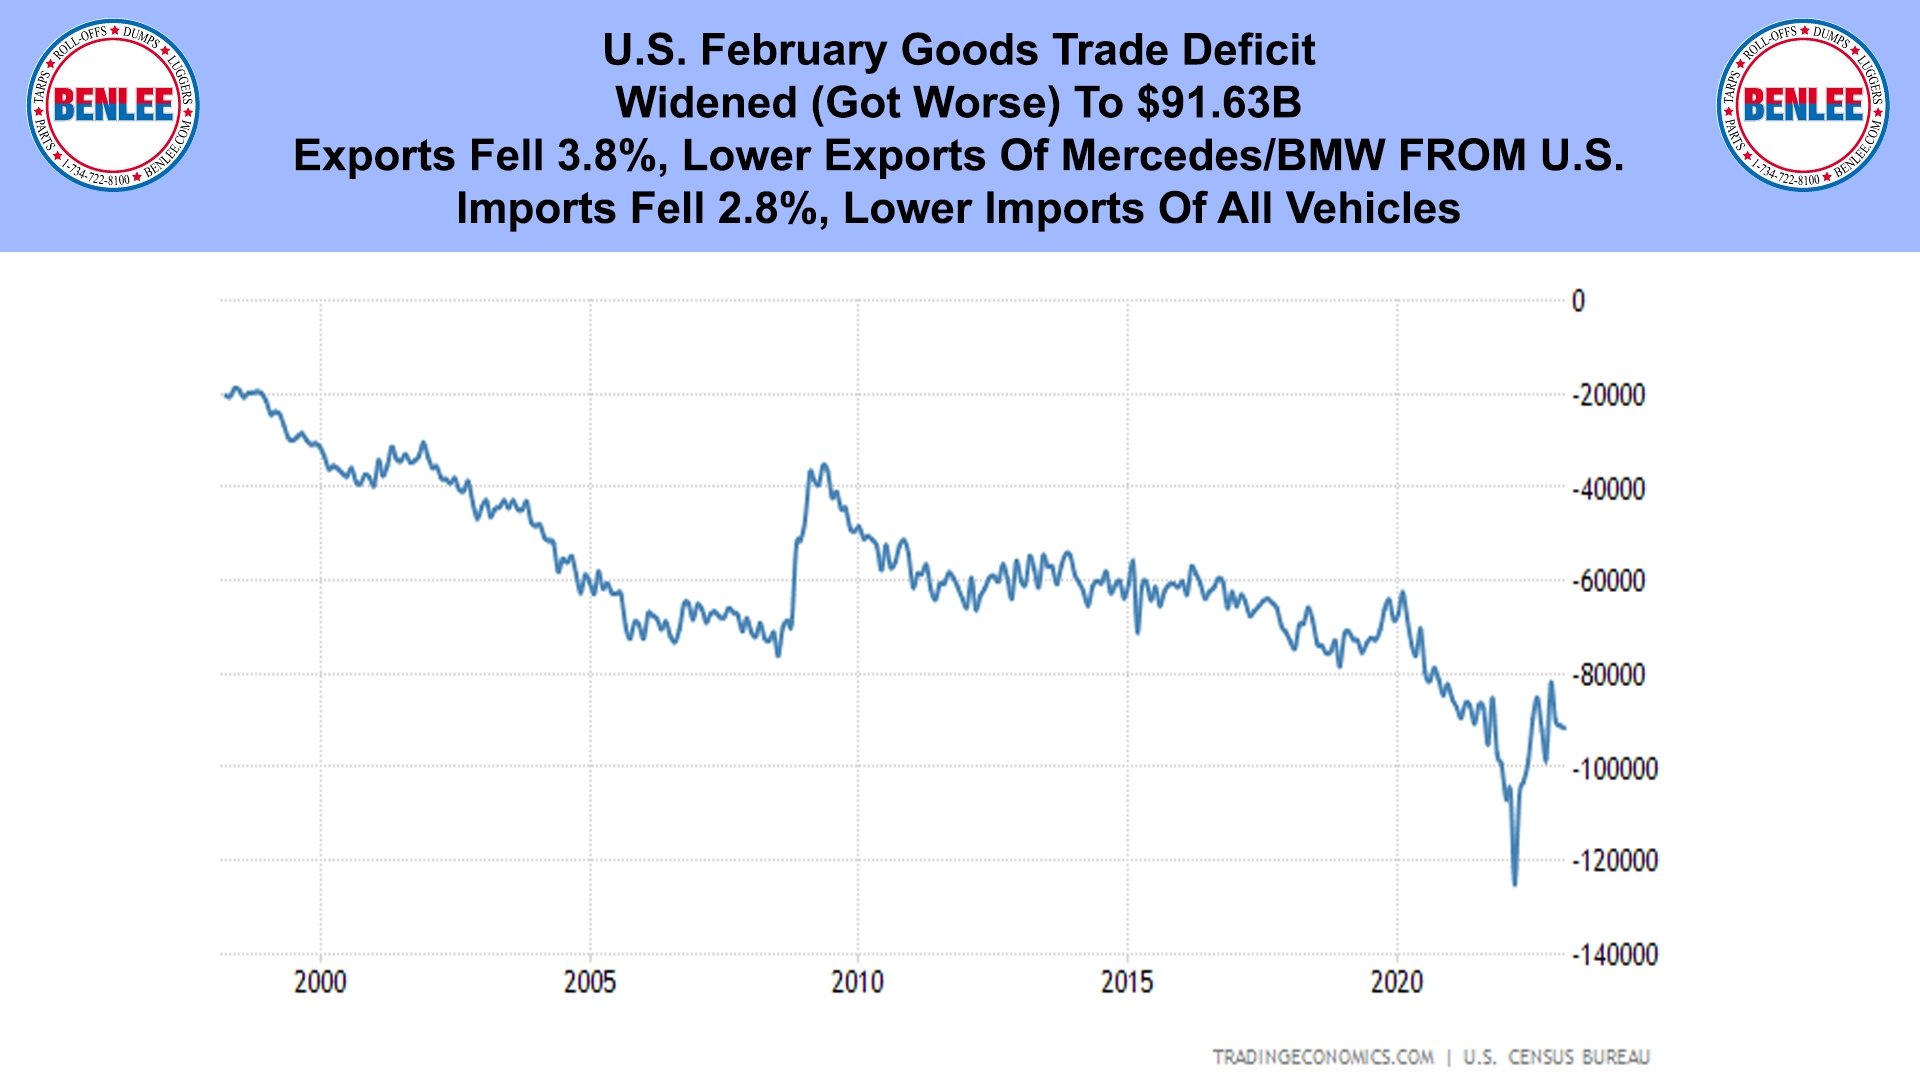 U.S. February Goods Trade Deficit